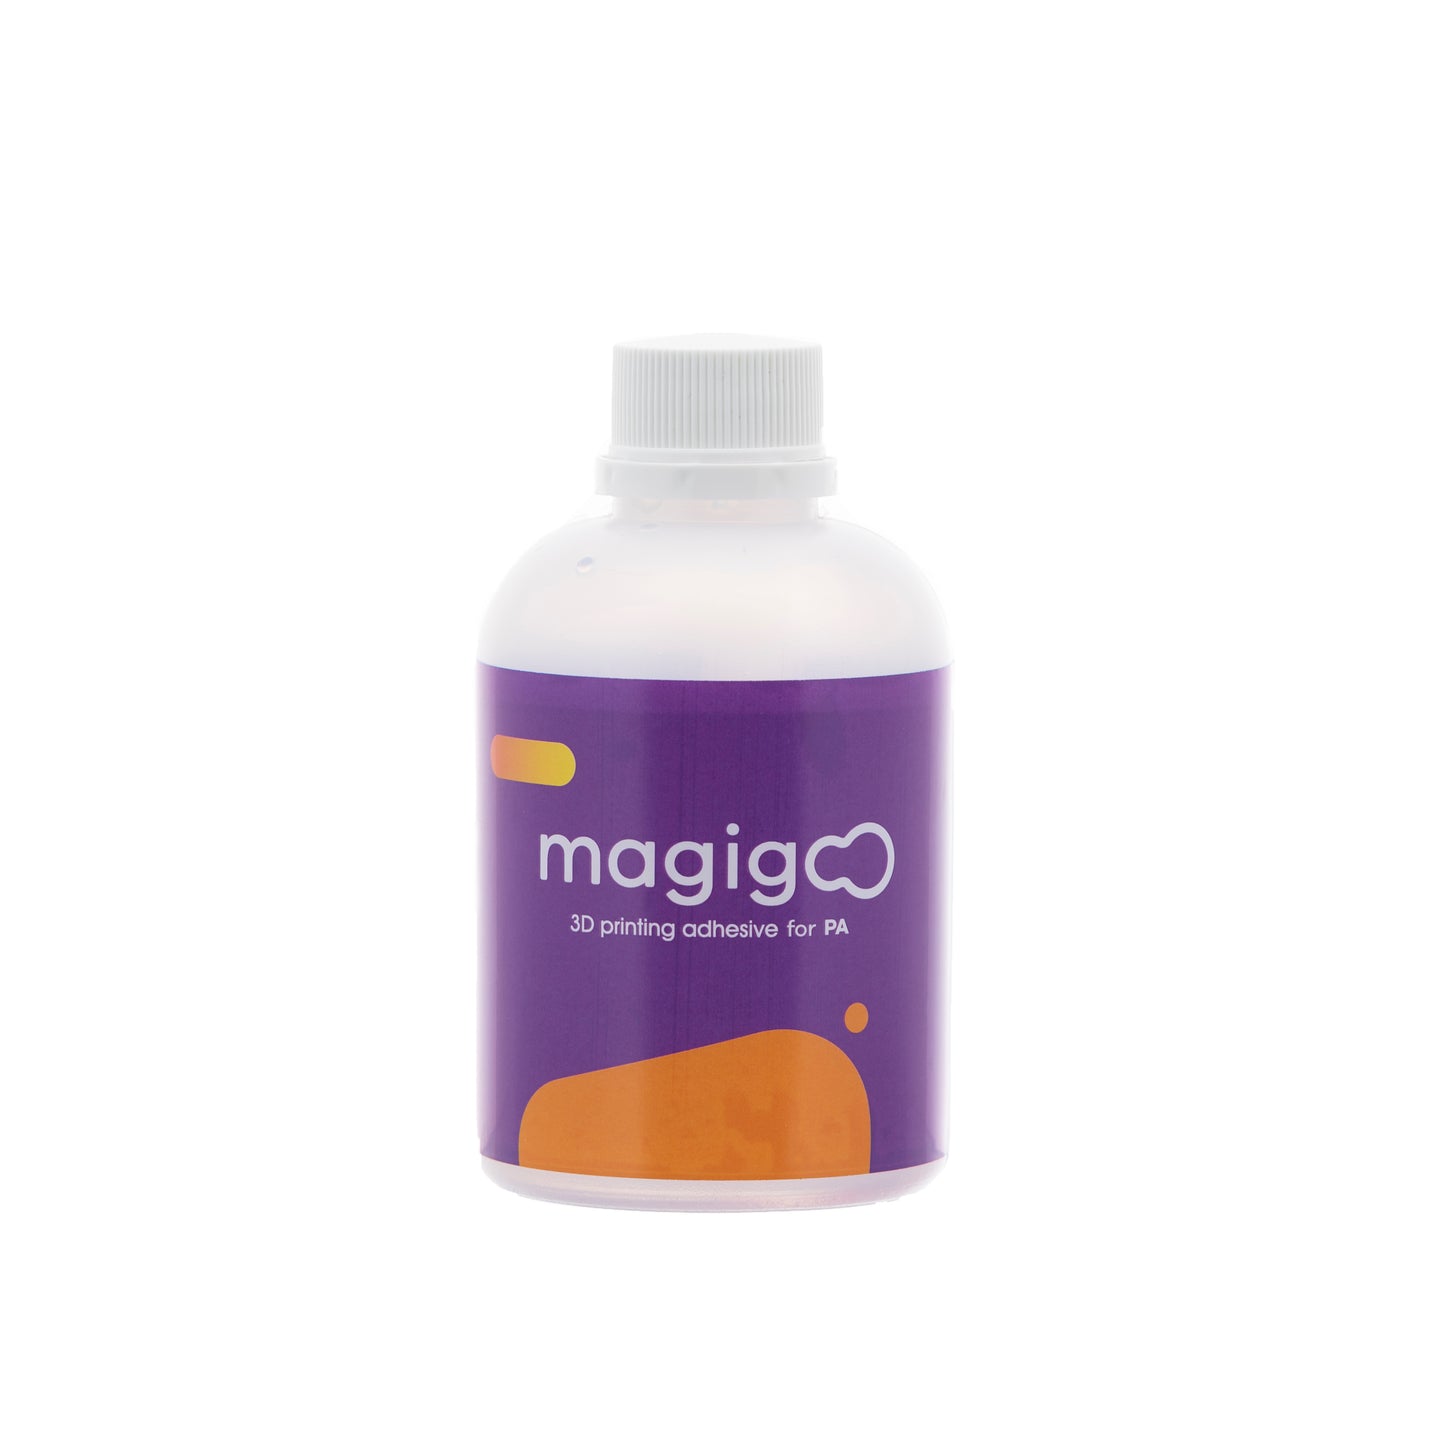 Magigoo PA - for Nylon and Nylon composites